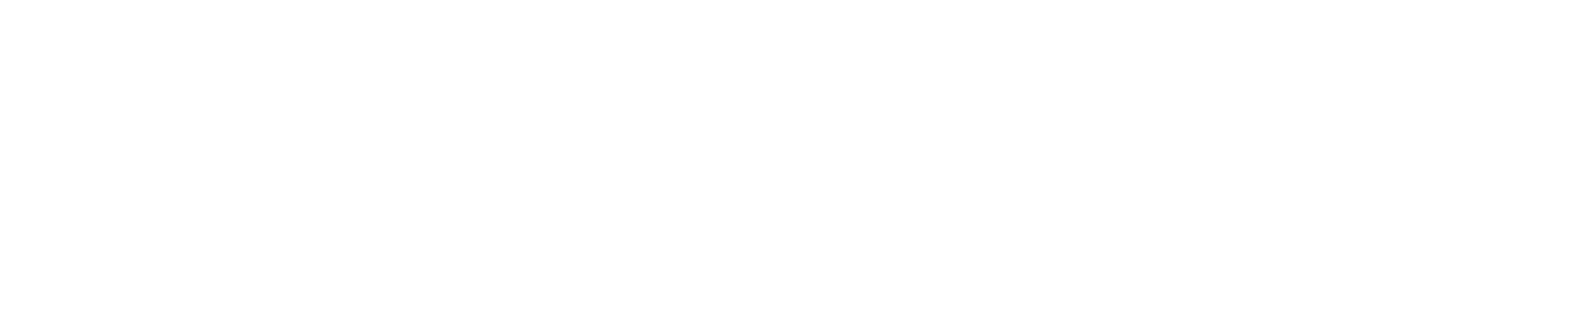 AtriCure Logo groß für dunkle Hintergründe (transparentes PNG)